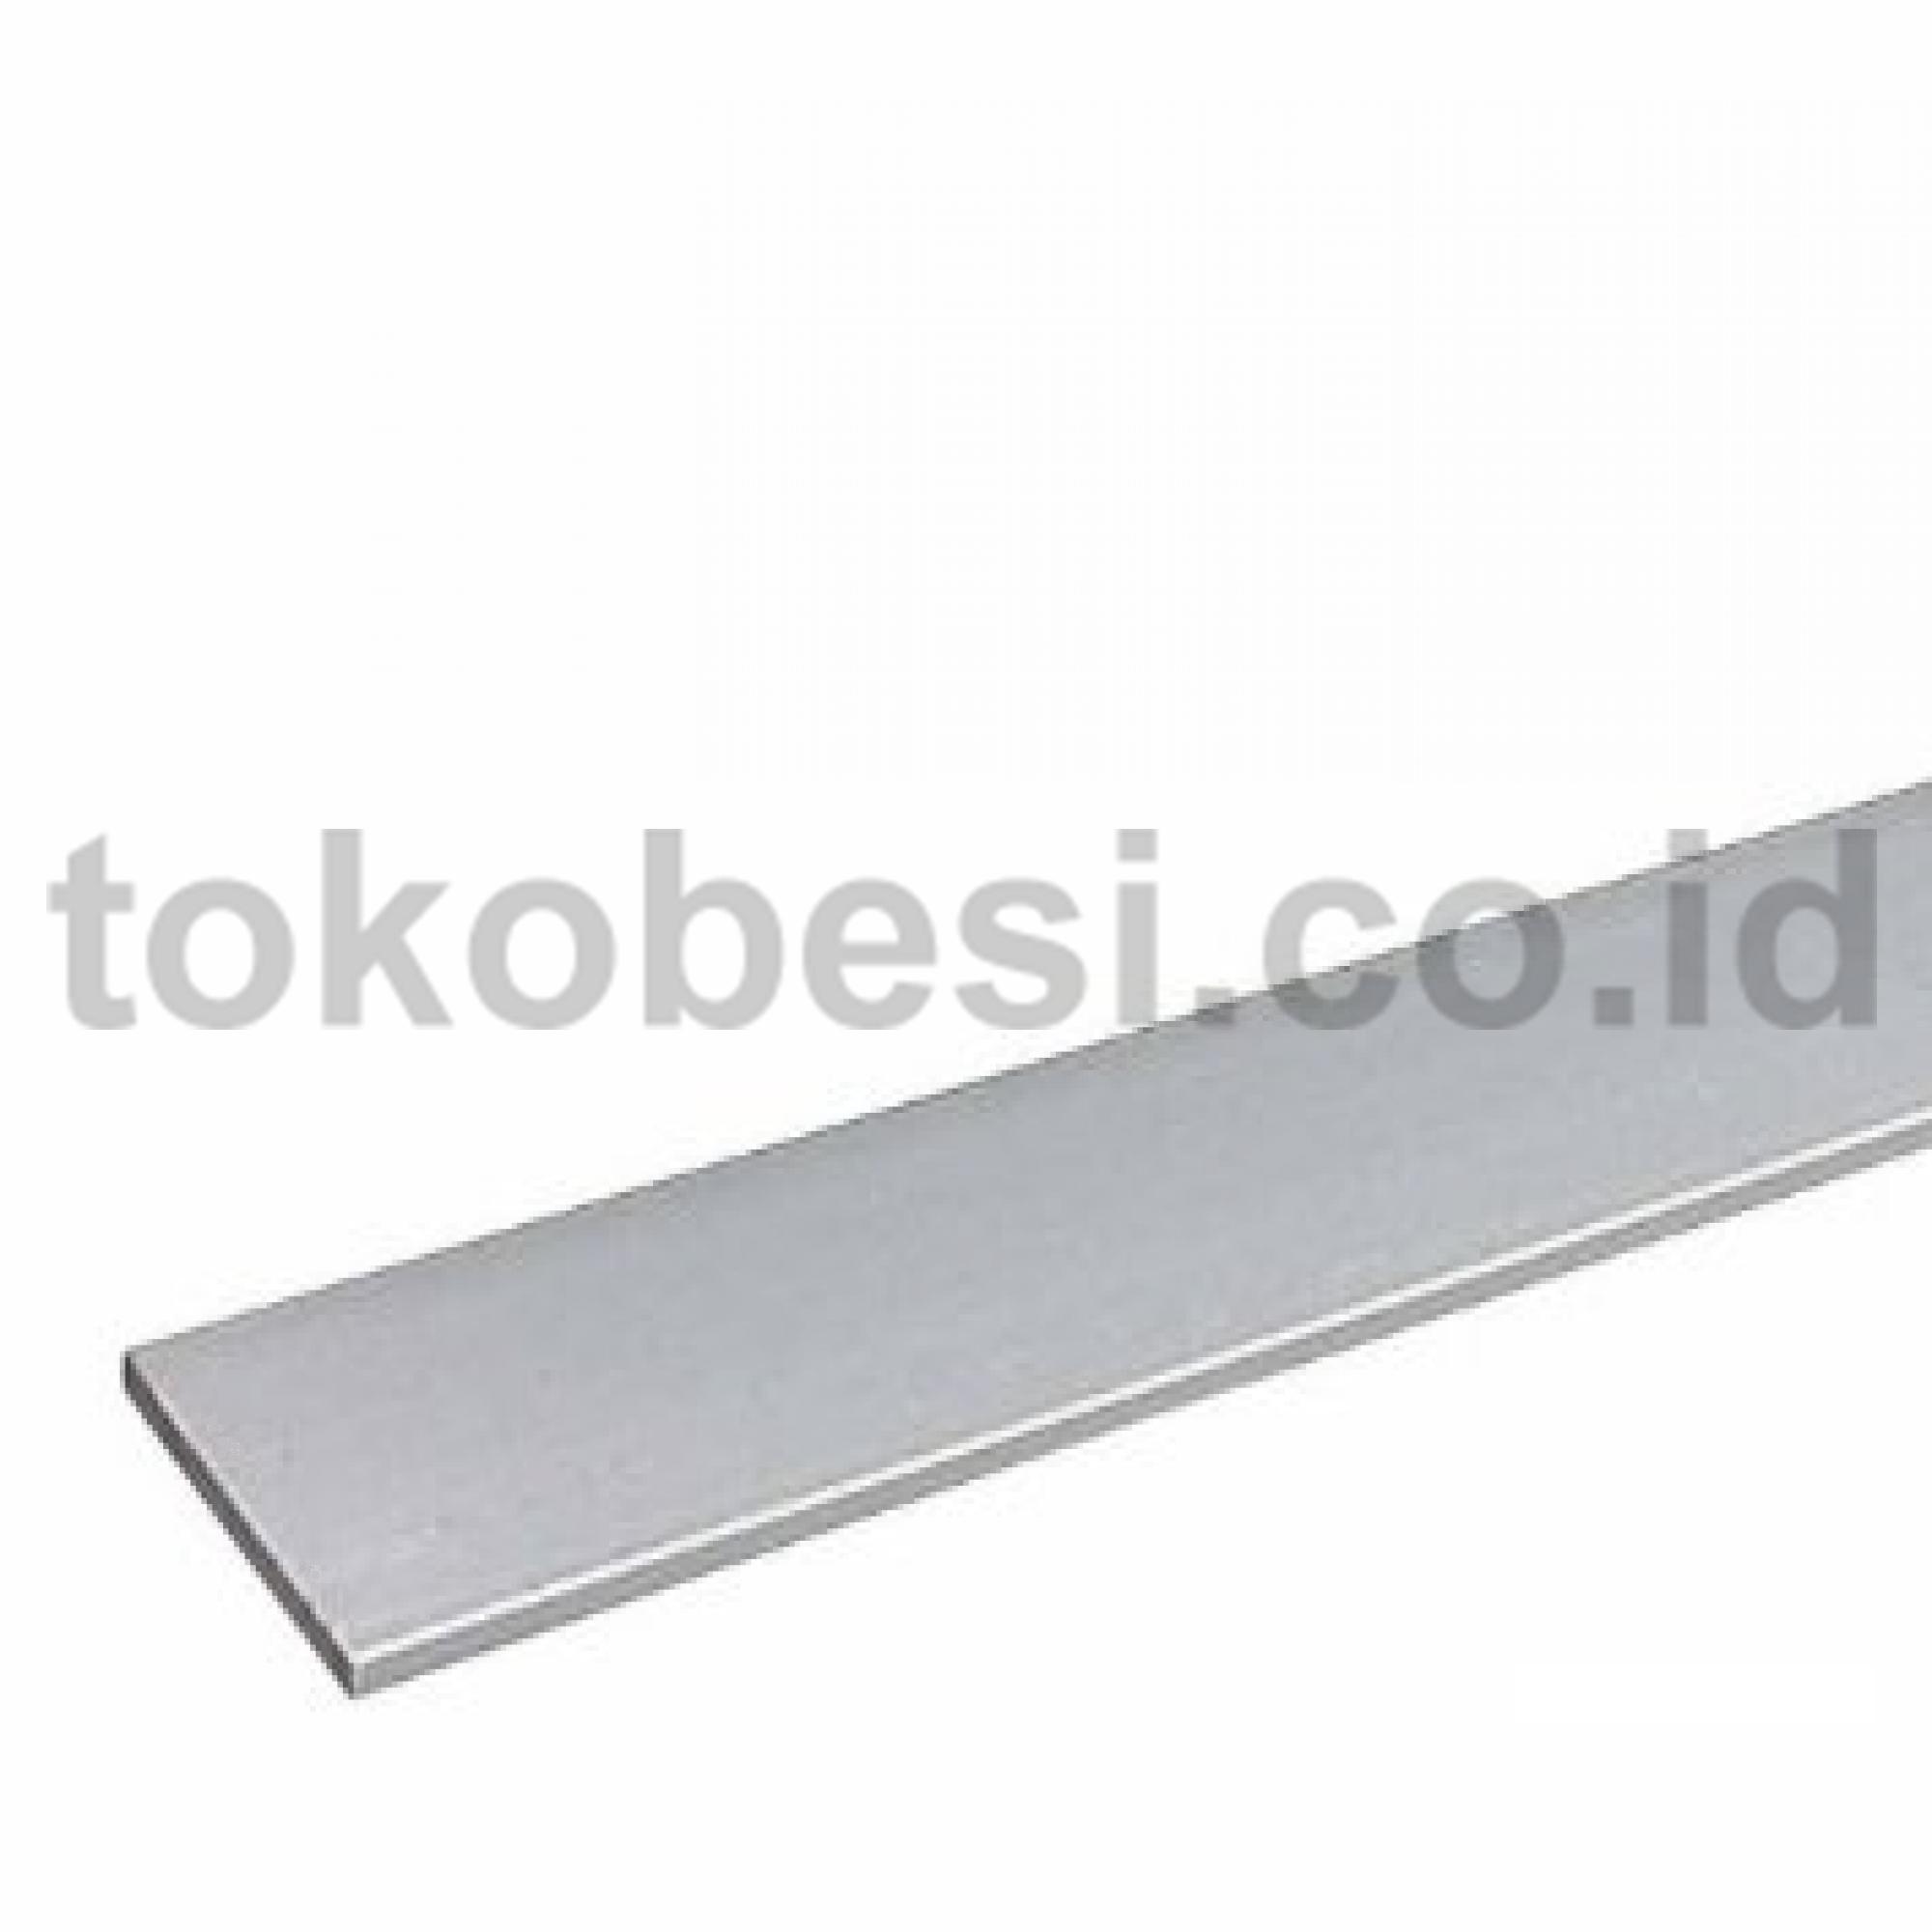 Strip Stainless Steel 304 ≠  4 x 30 x 6000 mm